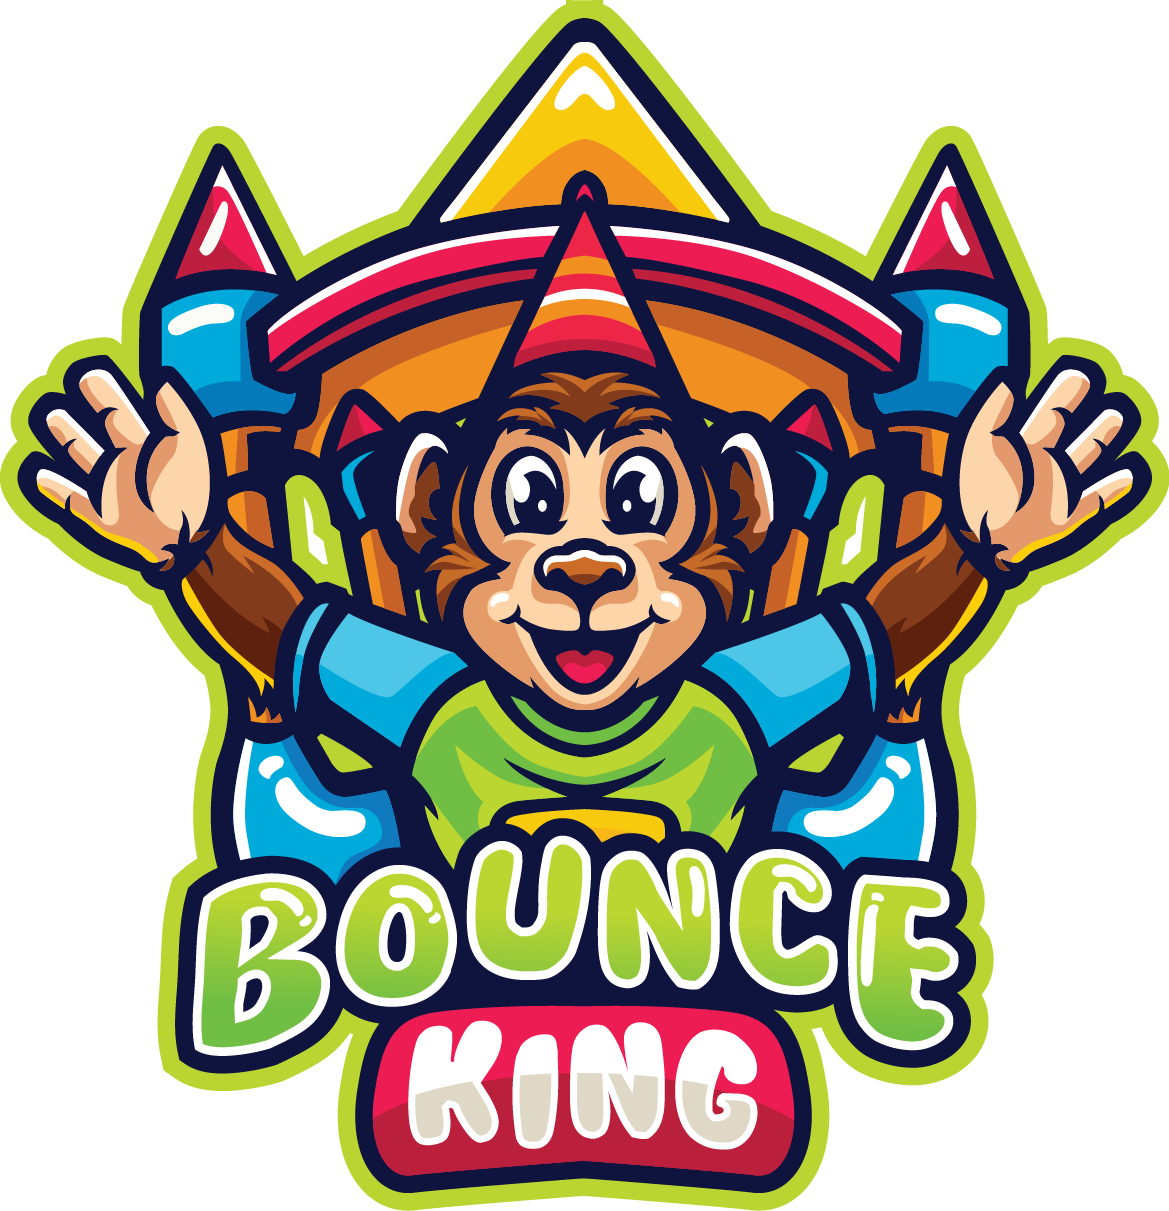 Bounce King